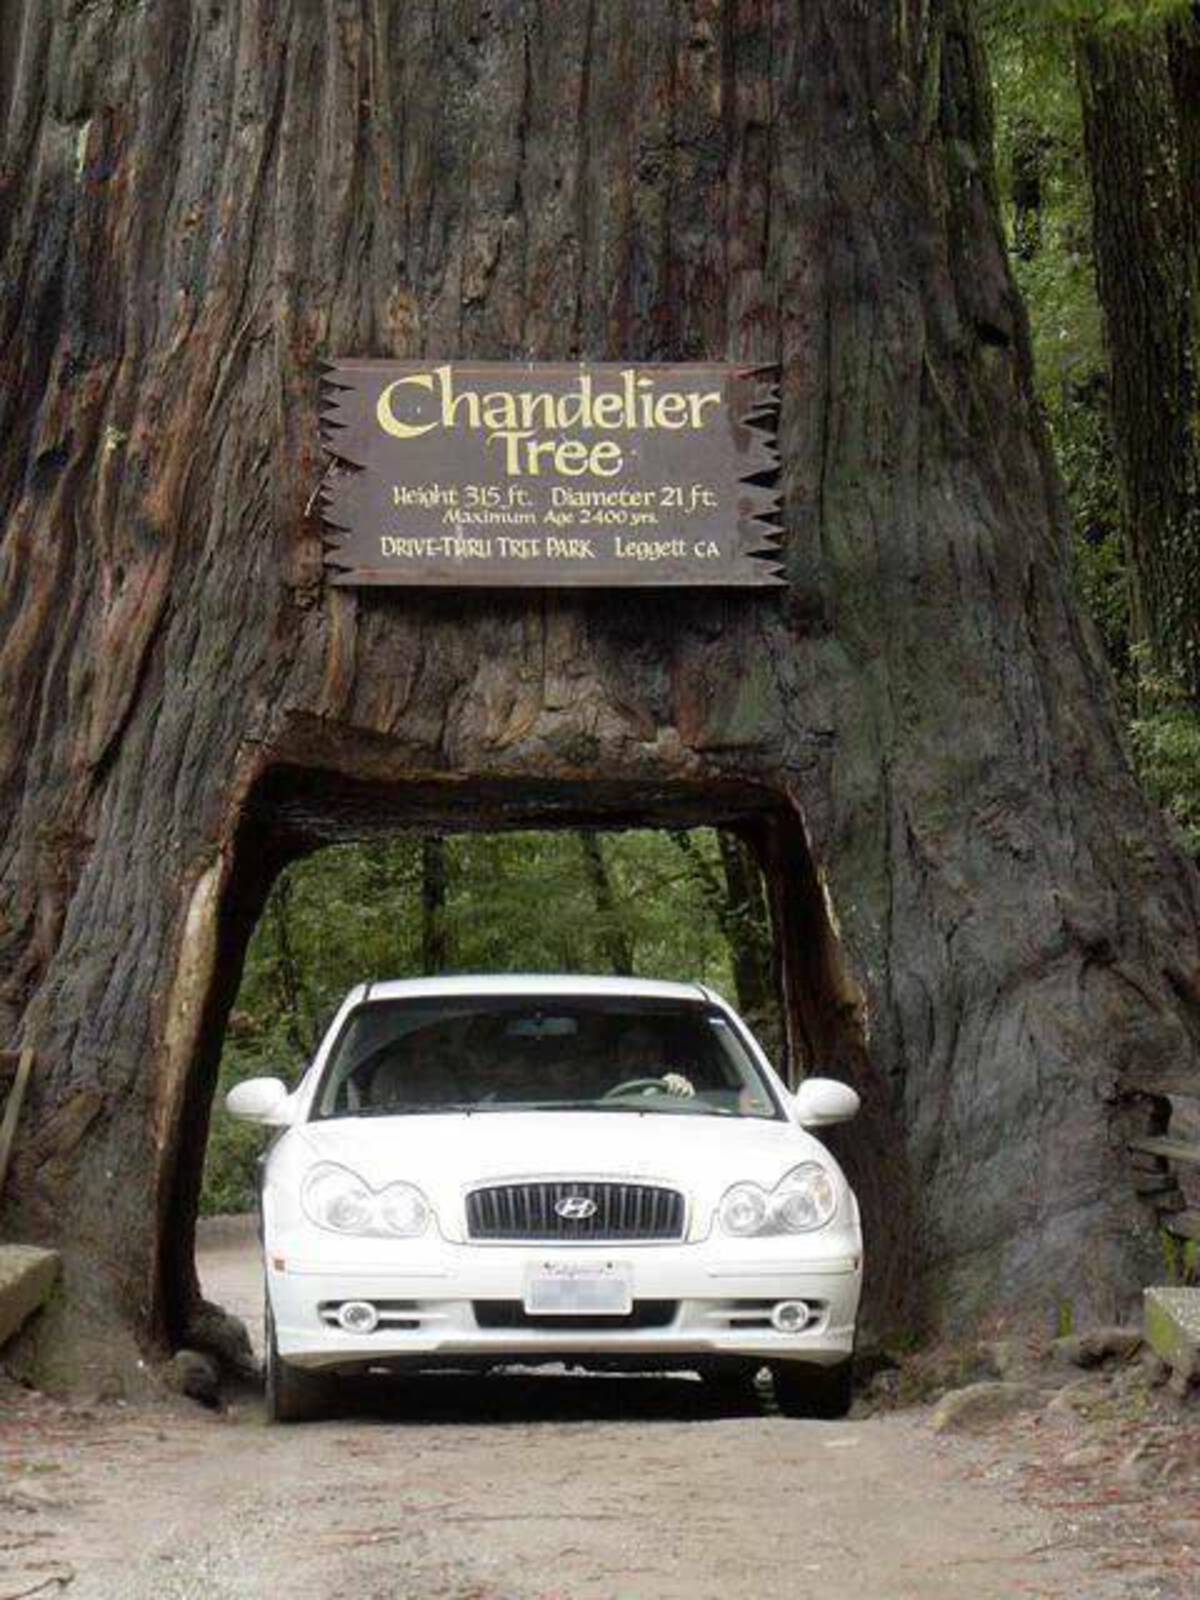 Chandelier Tree Height 315 ft. Diameter 21 ft. Maximum Age 2400 yrs DriveThru Tree Park Leggett Ca